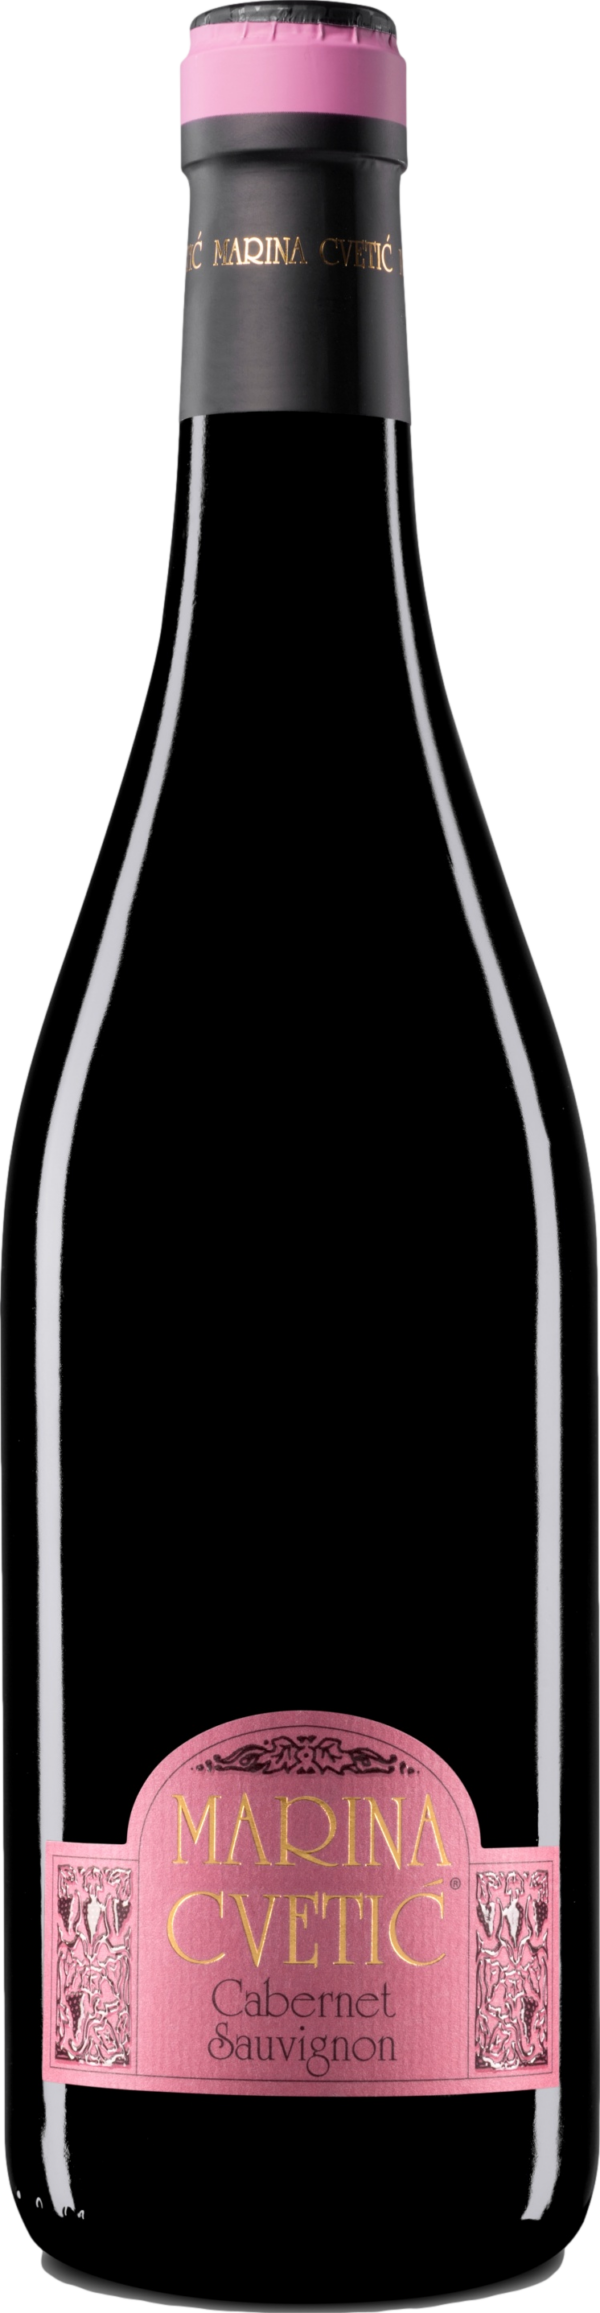 Product image of Masciarelli Marina Cvetic Cabernet Sauvignon 2015 from 8wines